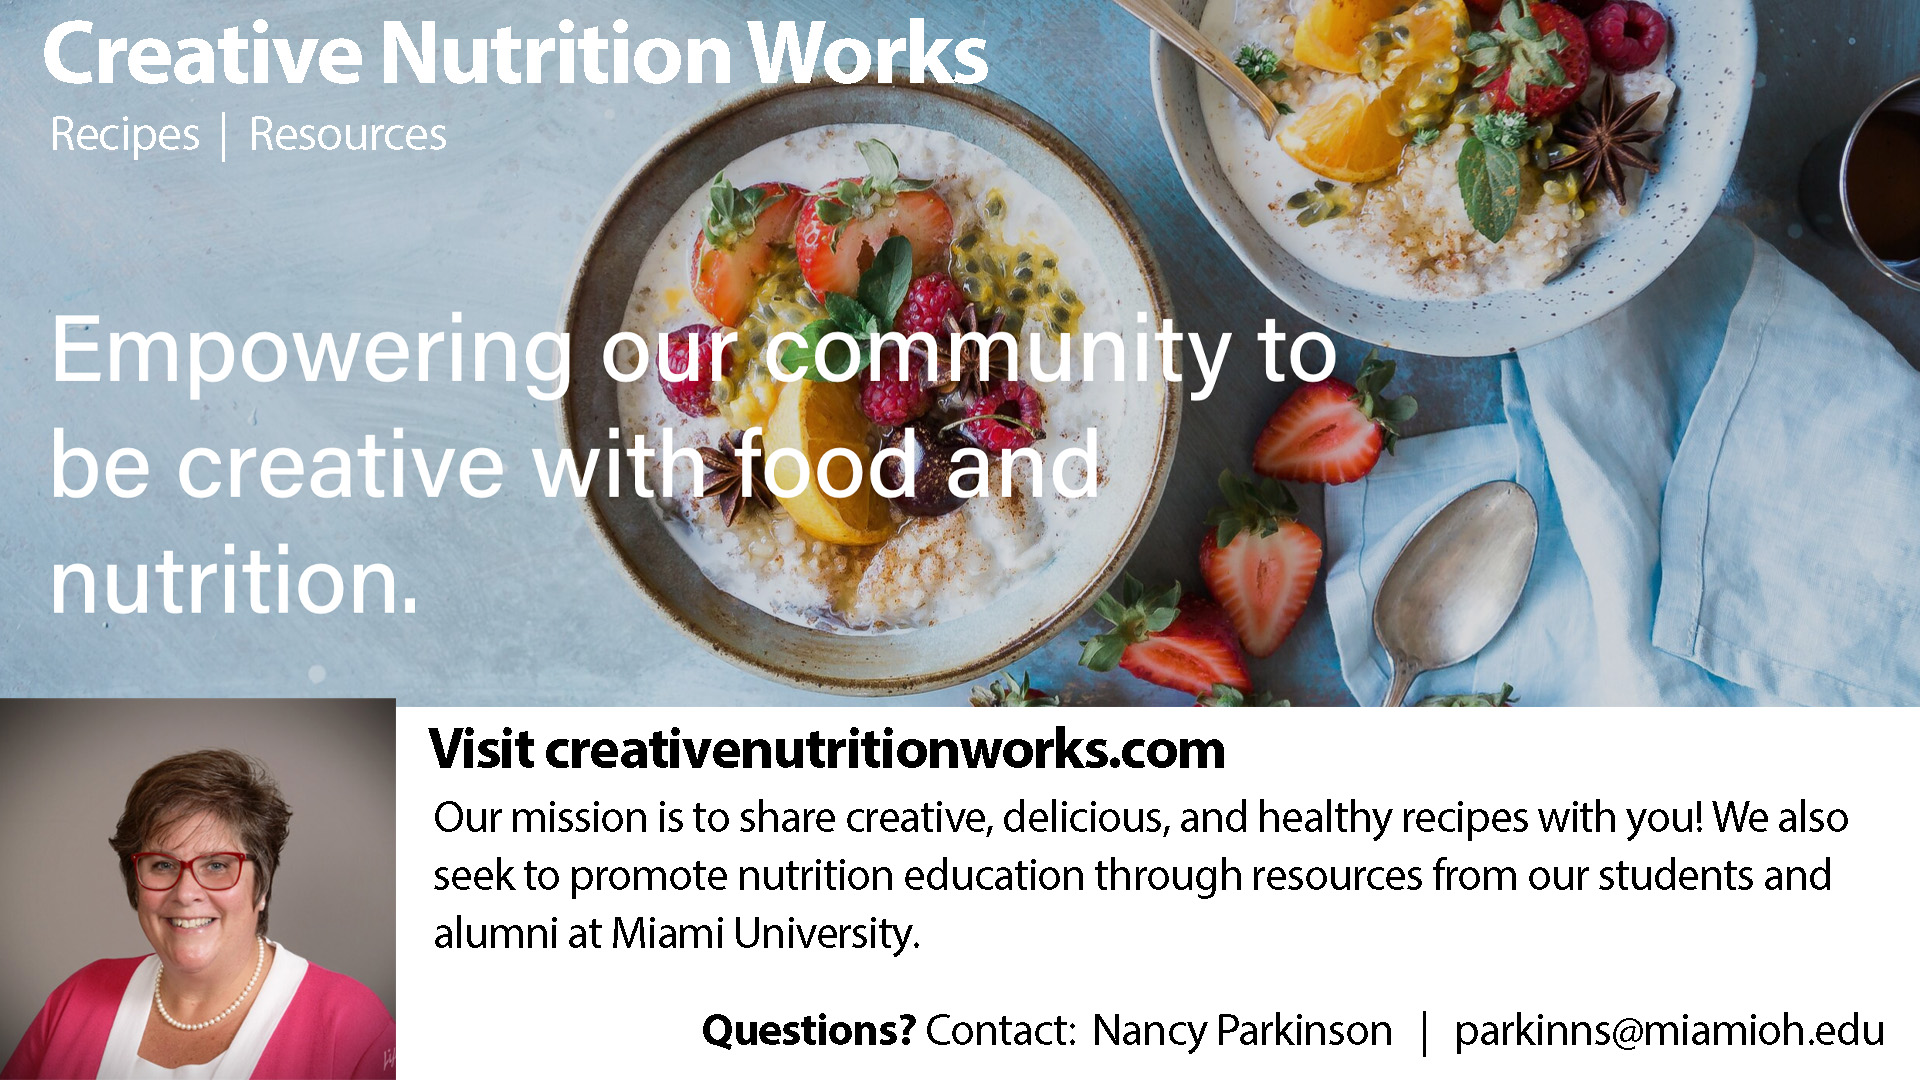 Creative Nutrition Works